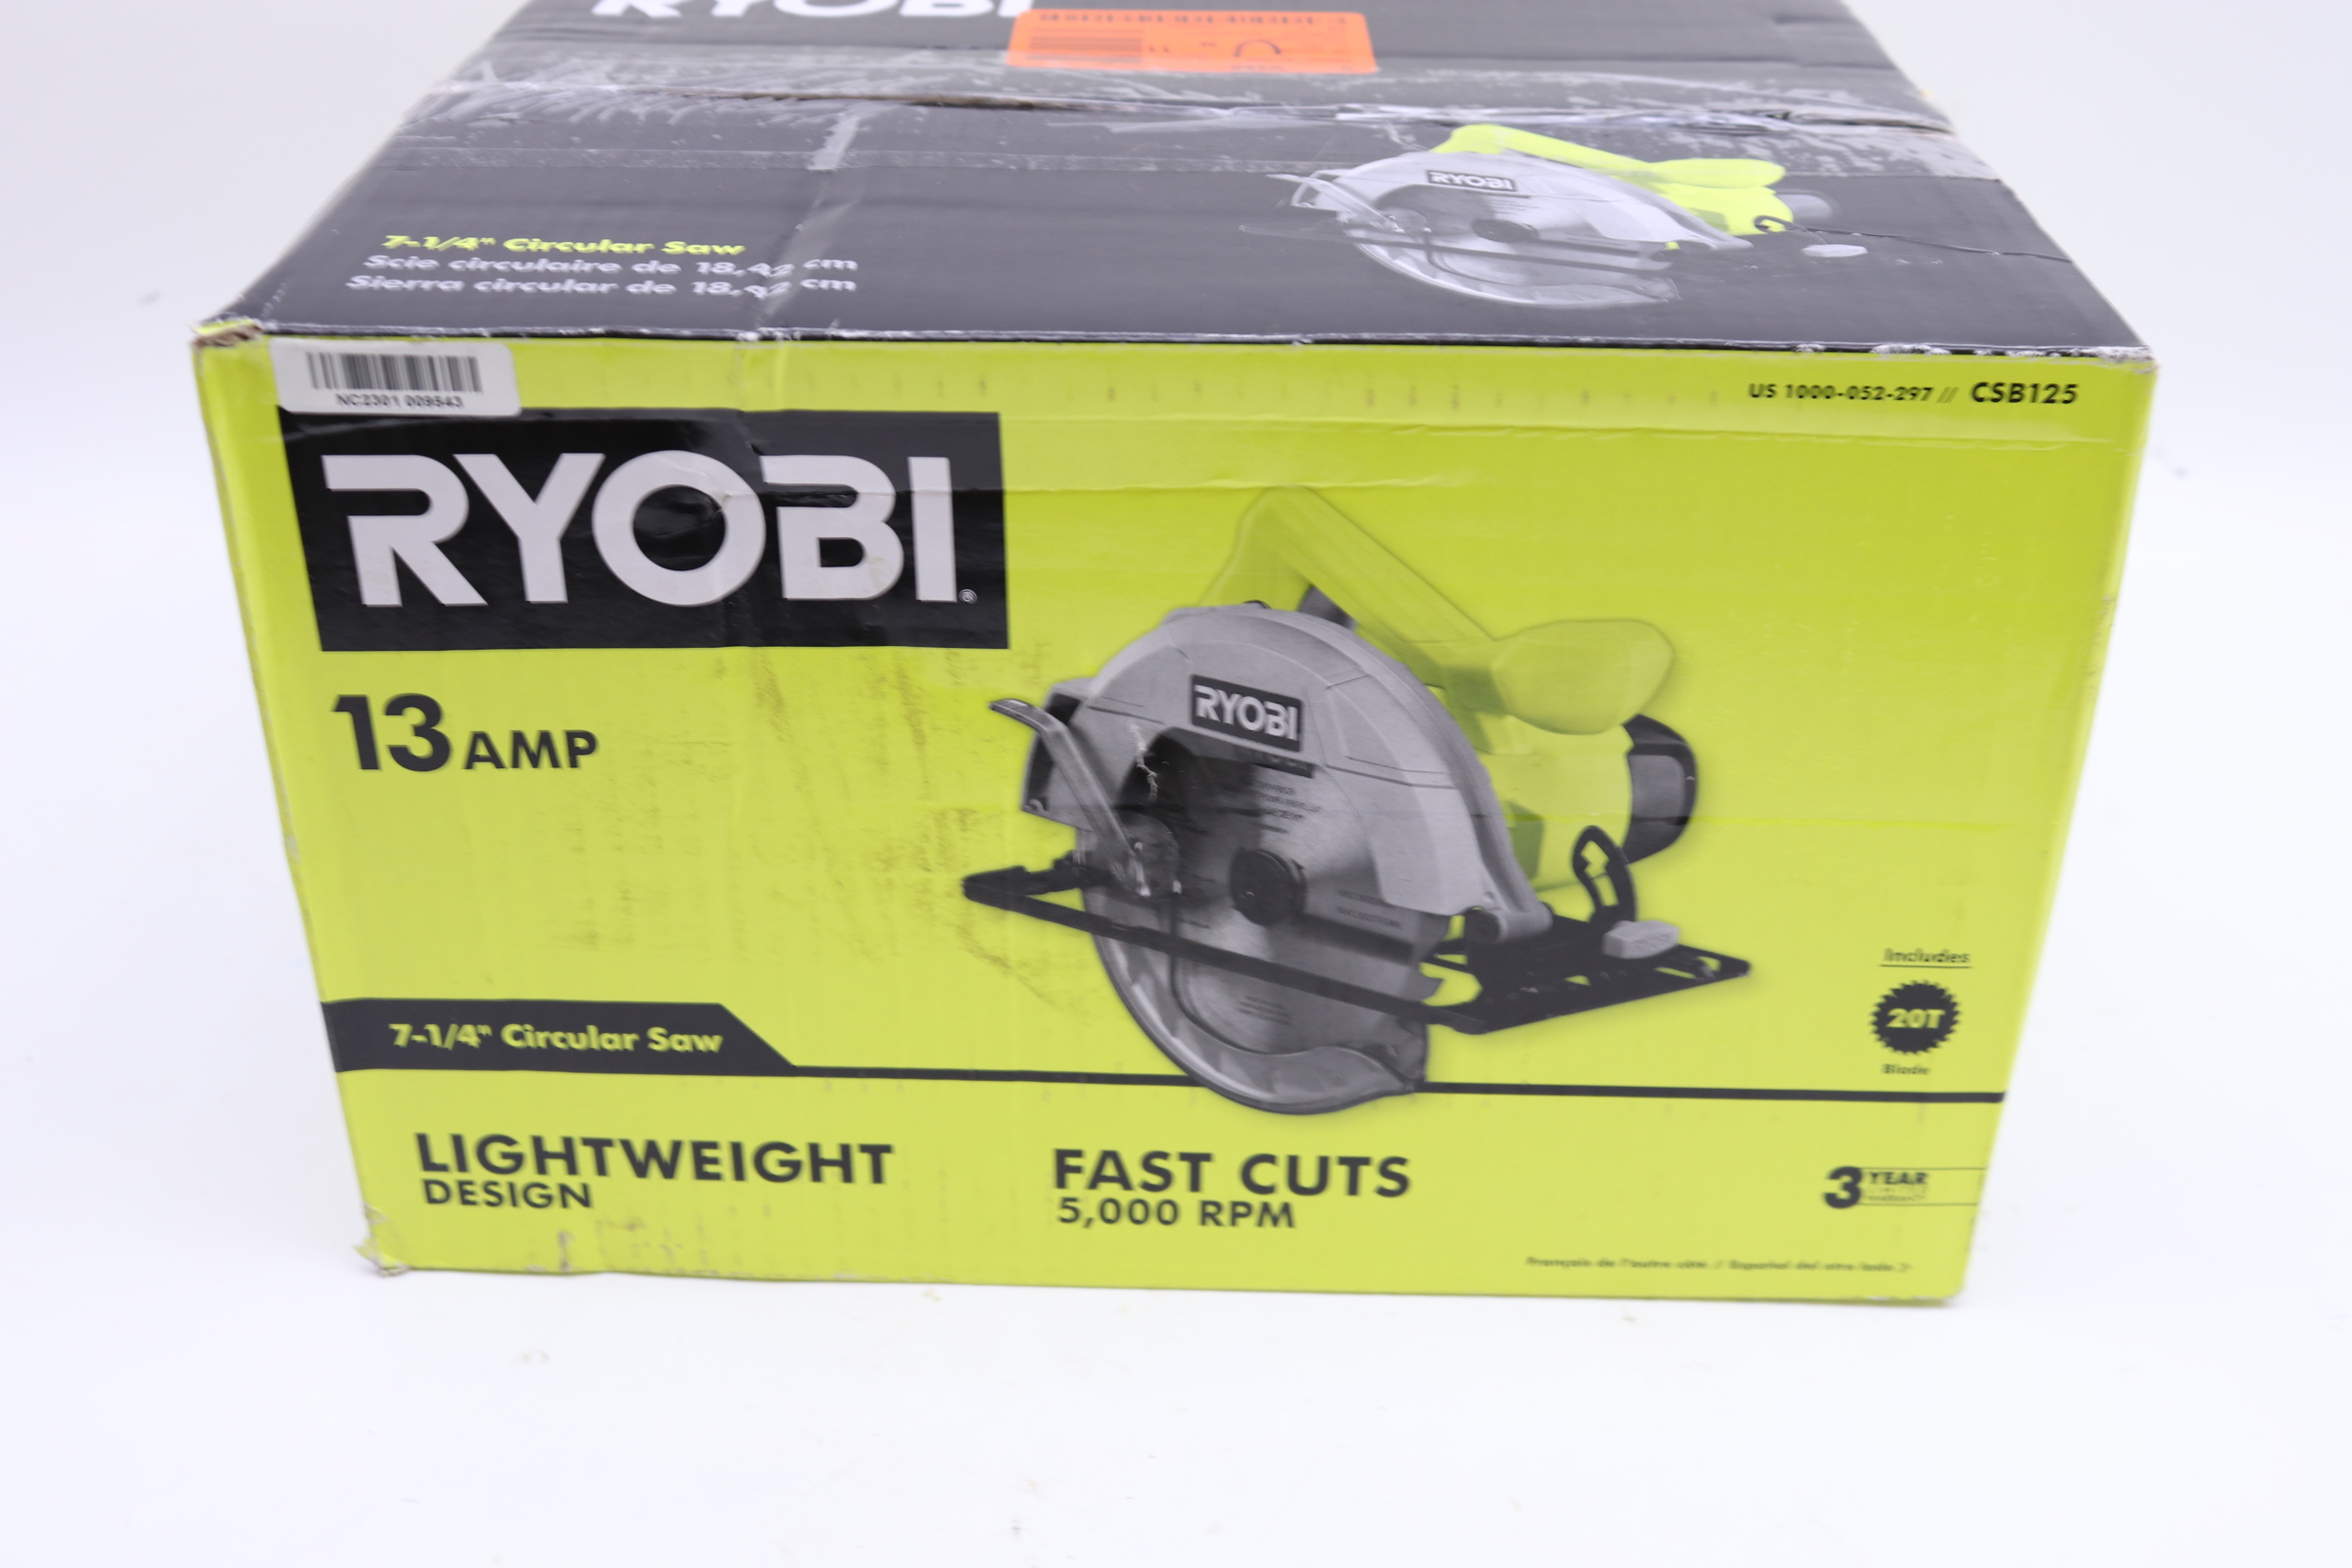 Ryobi CSB125 13 Amp 120V Corded Electric 7-1/4" Circular Saw